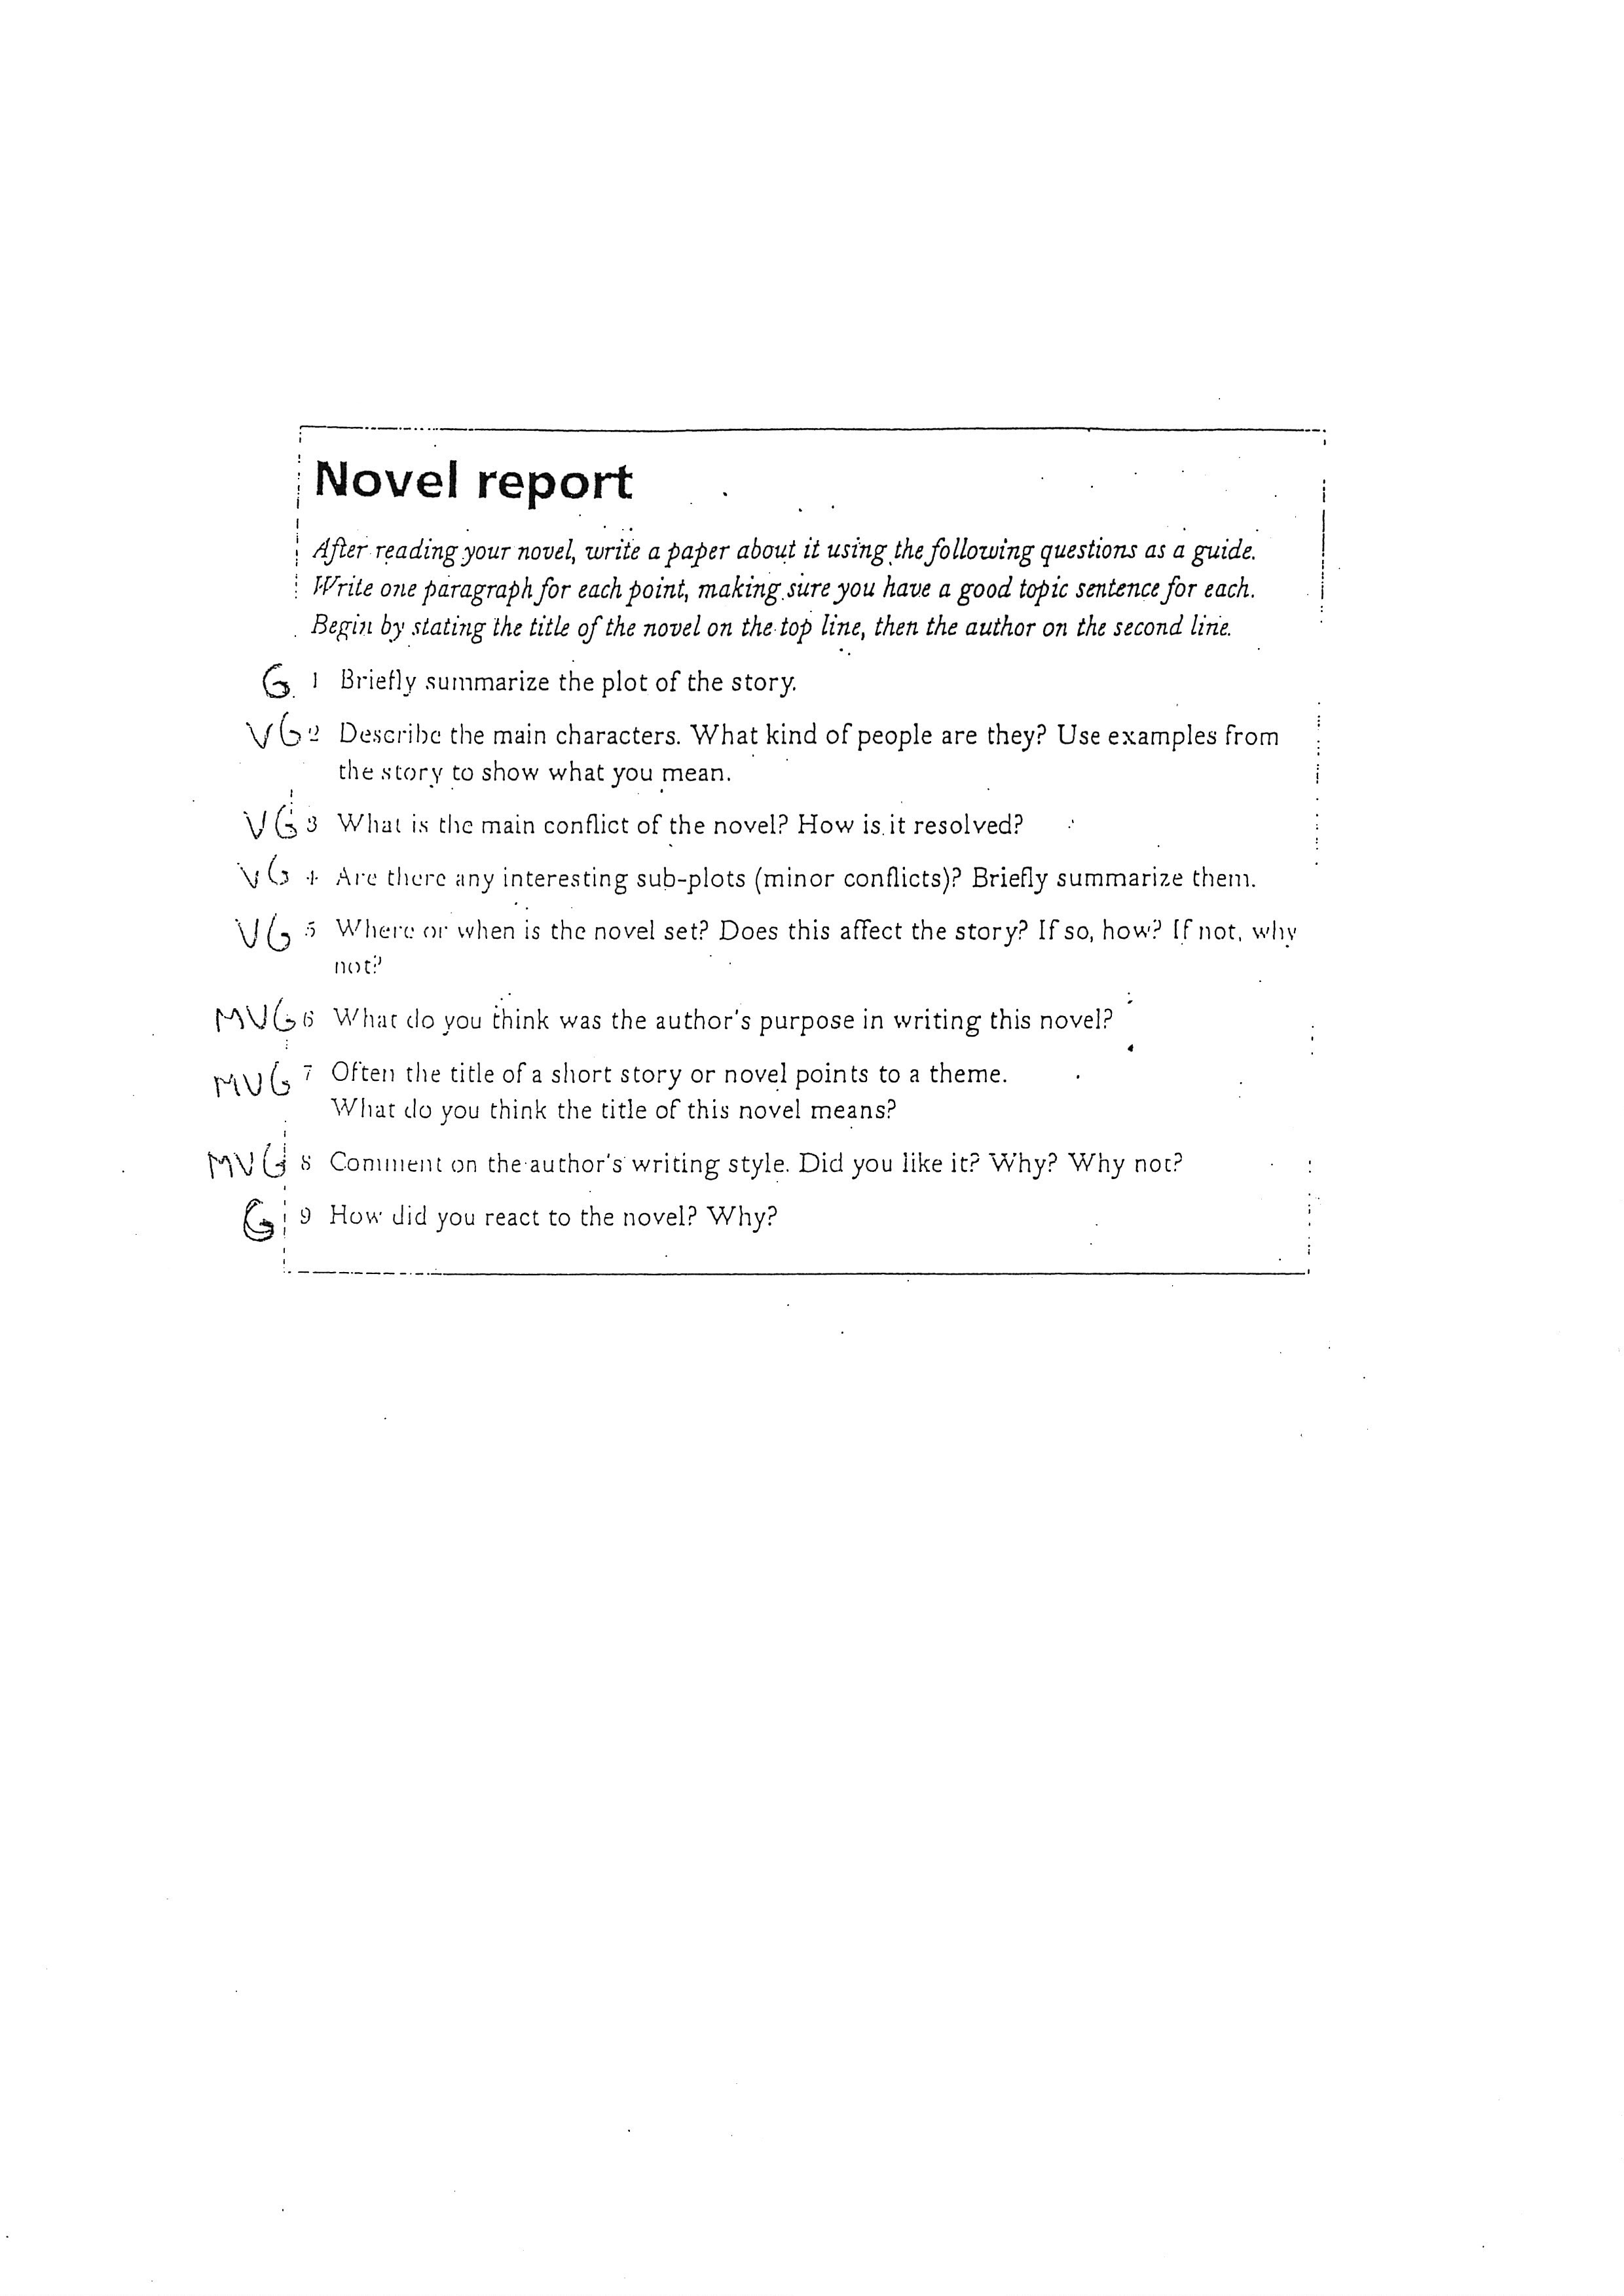 lectureInstruction_engelskaC_-_novel_report_01